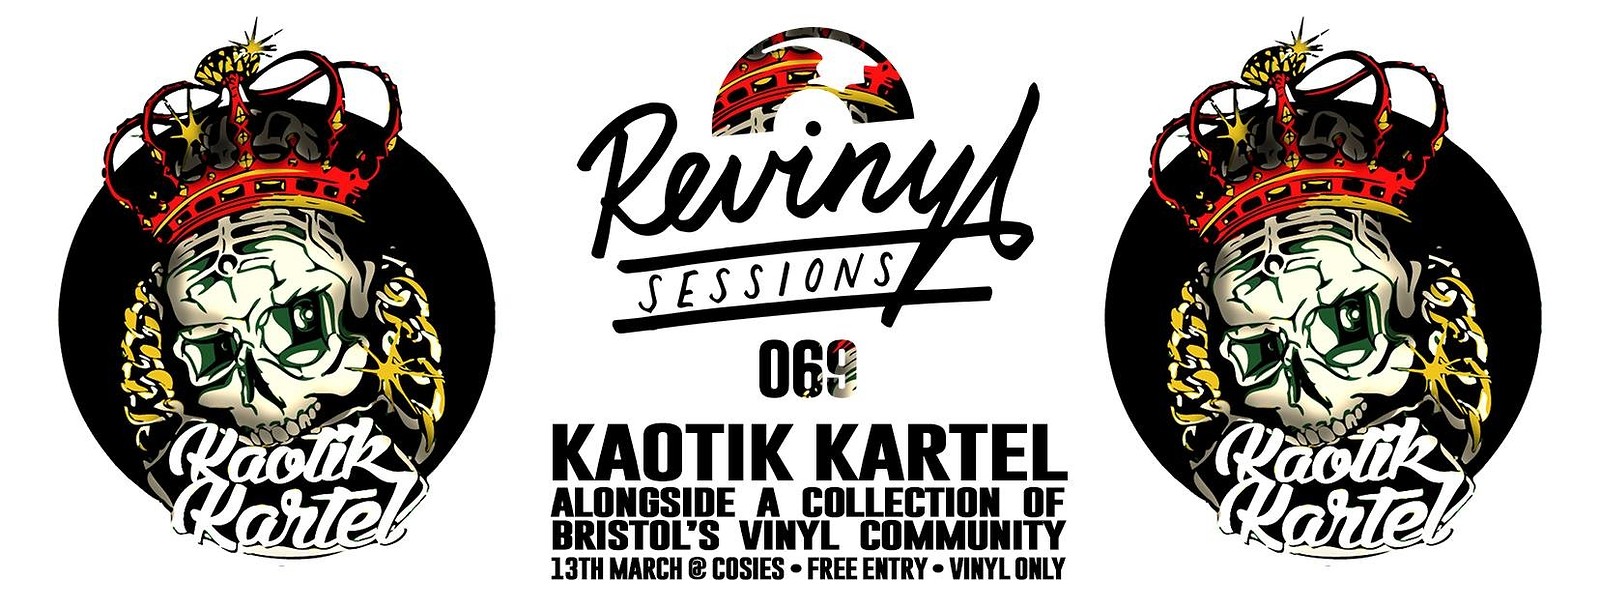 Revinyl Sessions 069 w/ Kaotik Kartel at Cosies